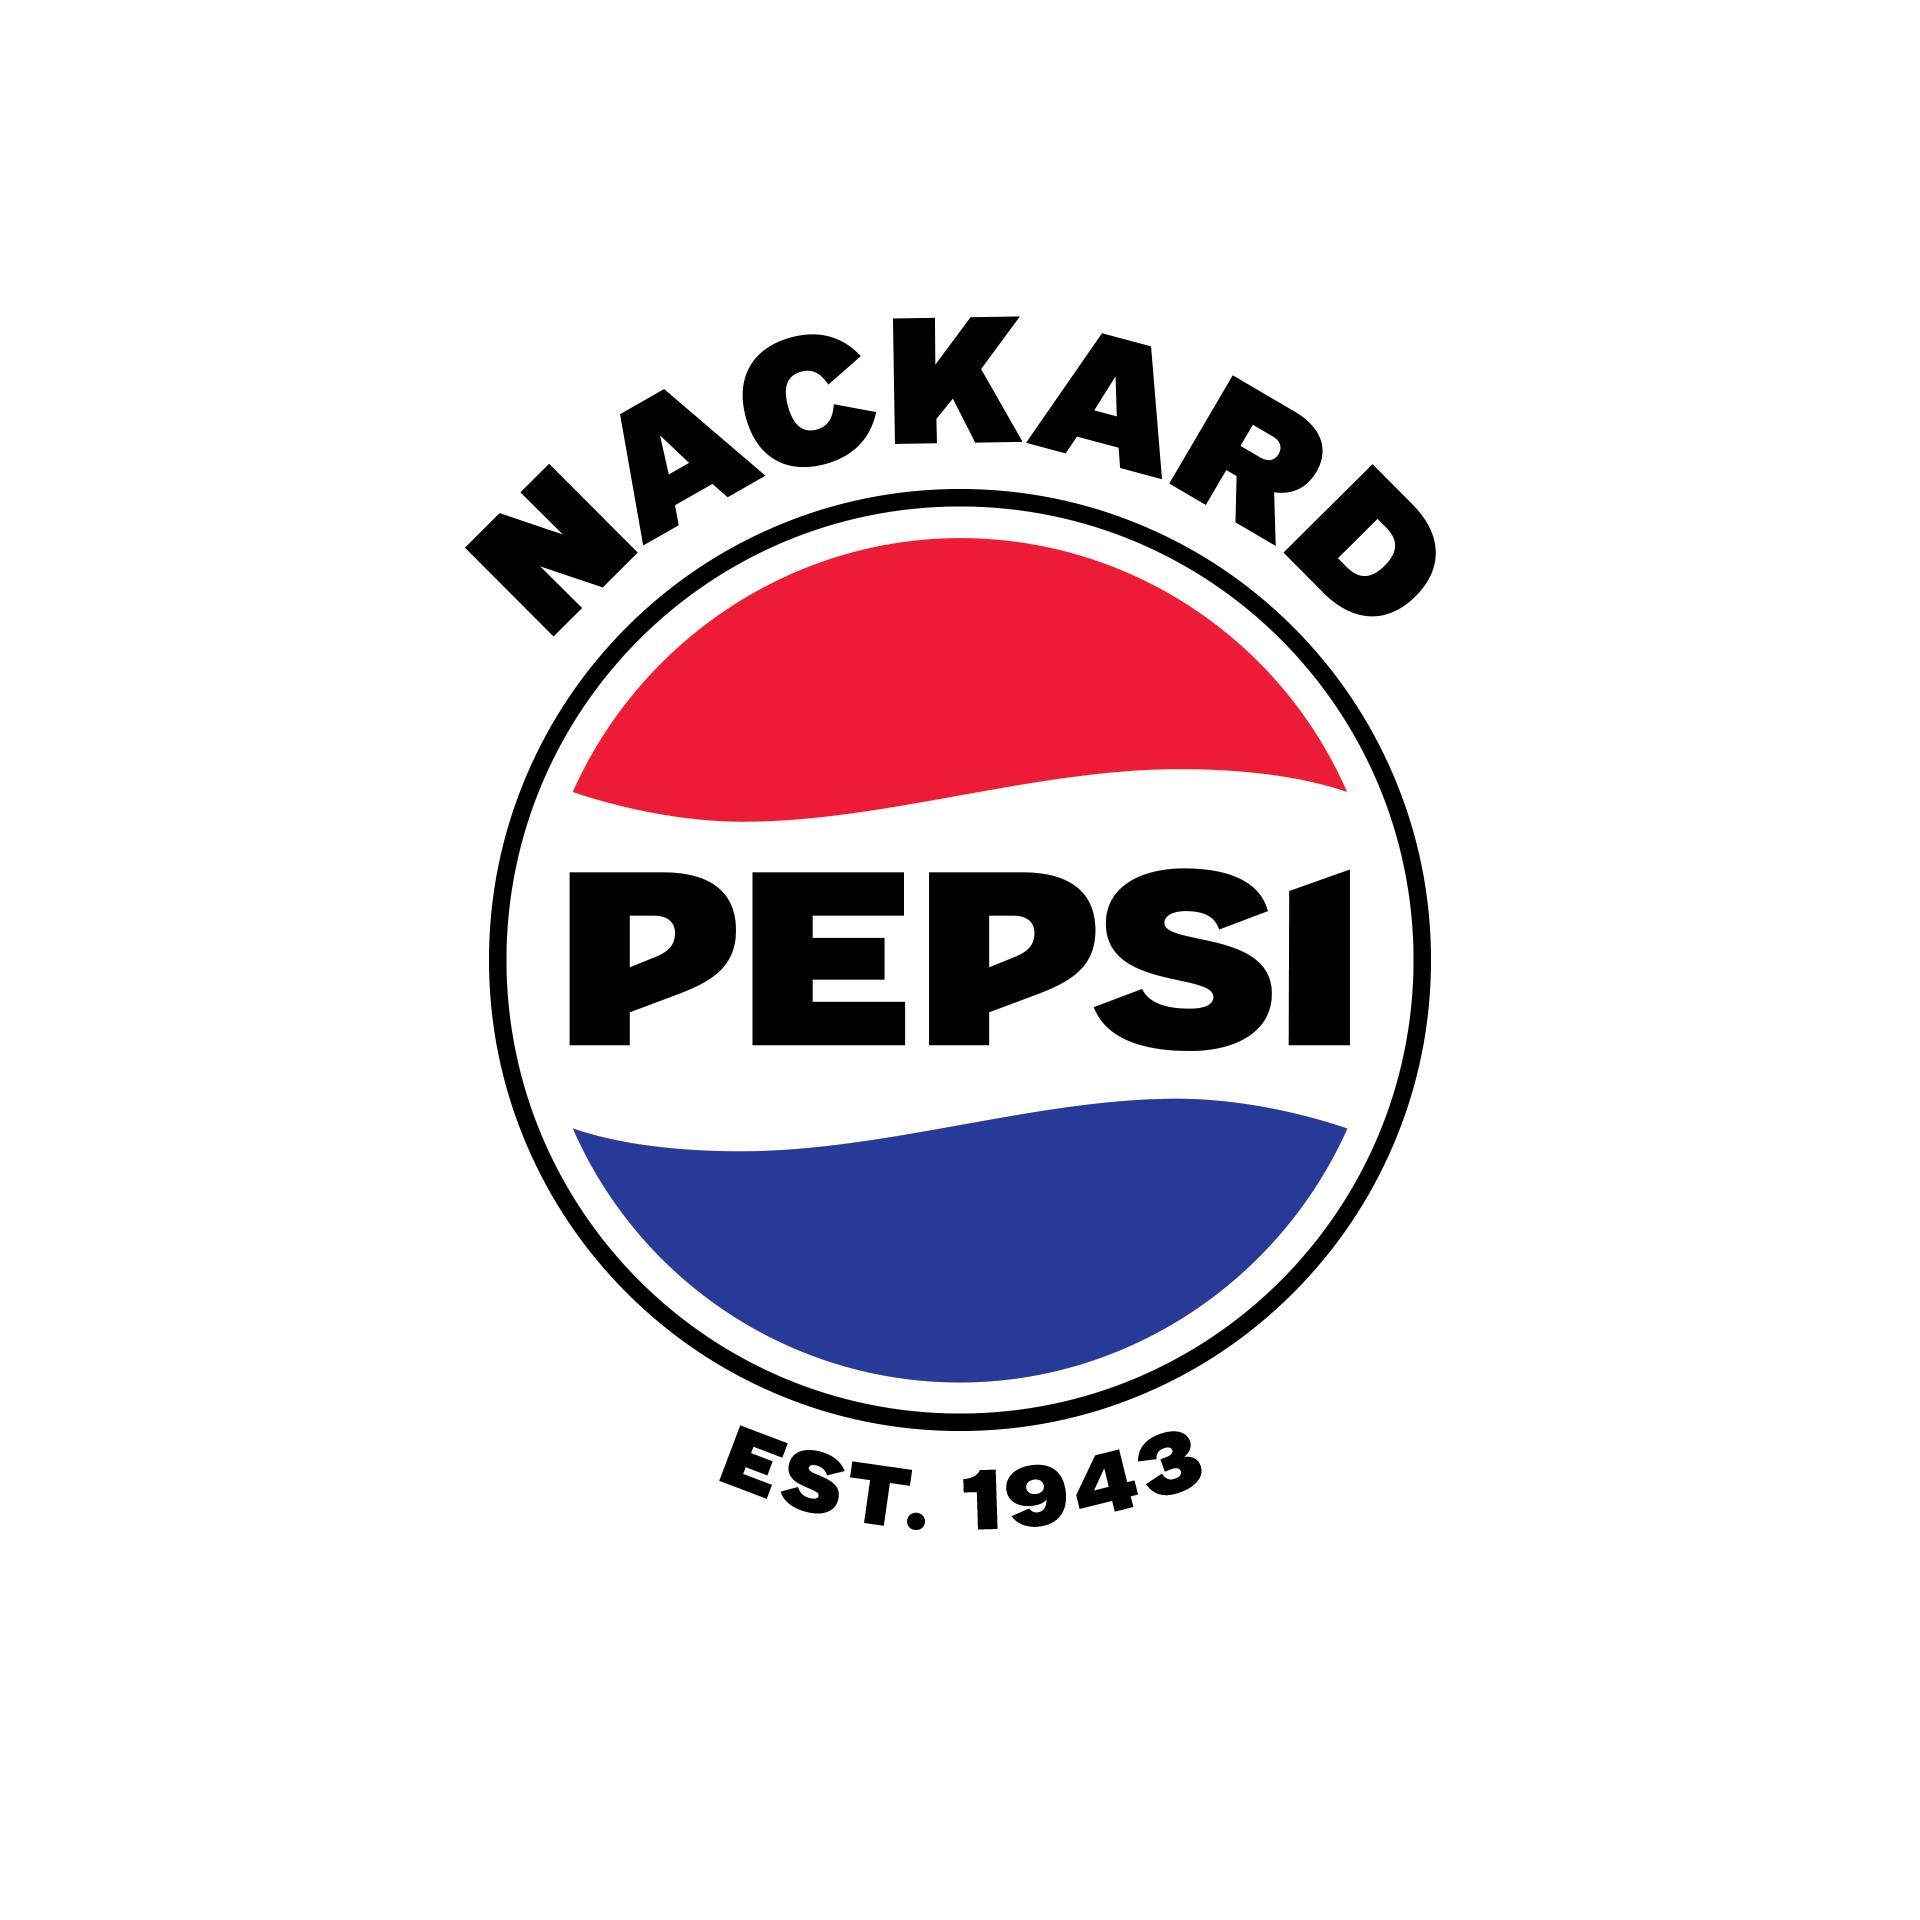 Nackard Pepsi